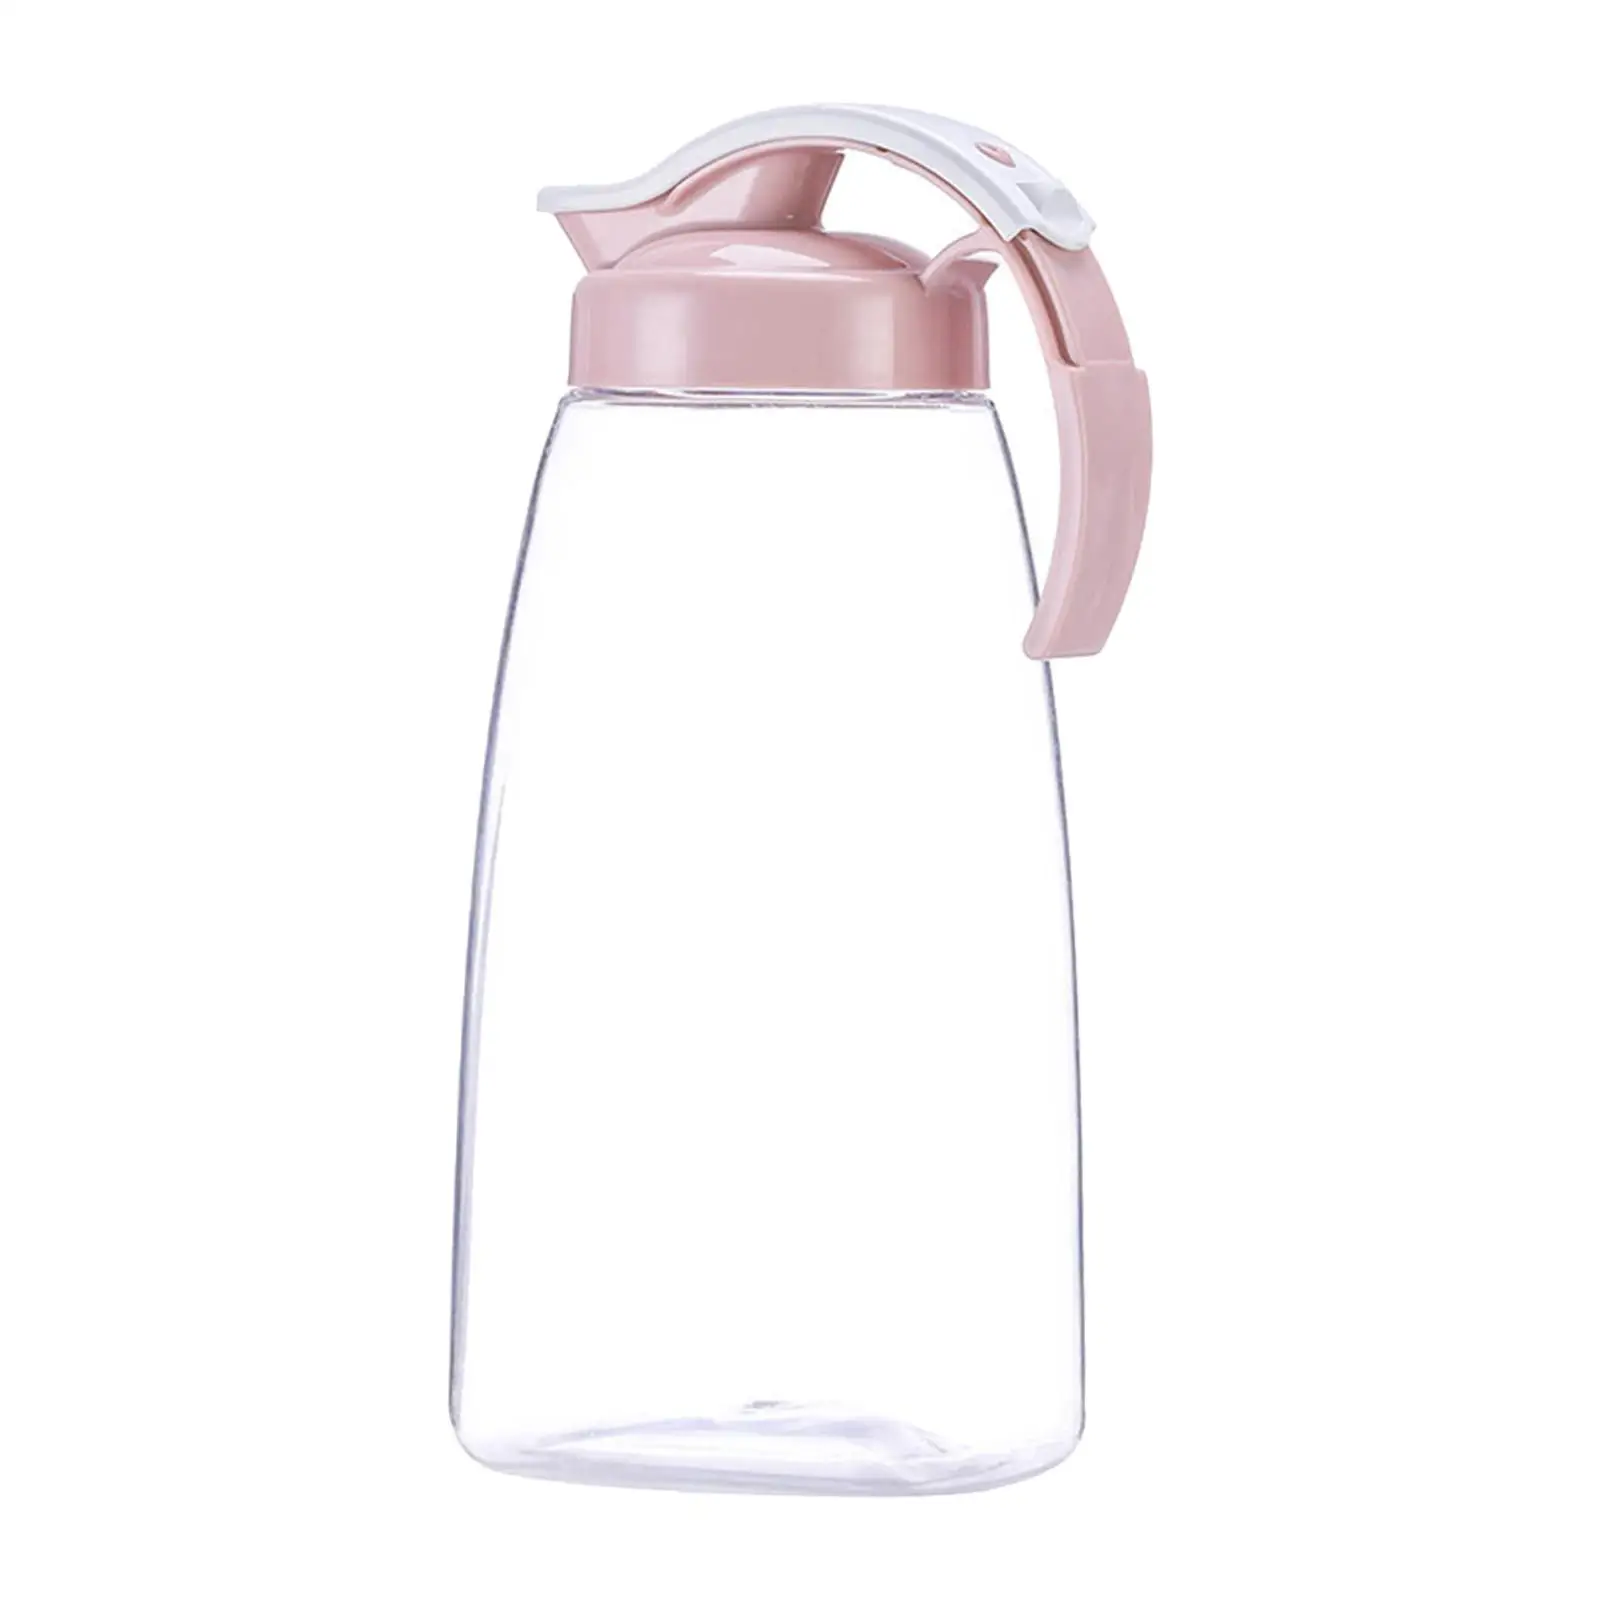 Drinks Water Jug Tea Kettle Sealed Lid Drinkware Beverage Jar Water Pitcher for Household Holidays Barbecues Picnic Refrigerator